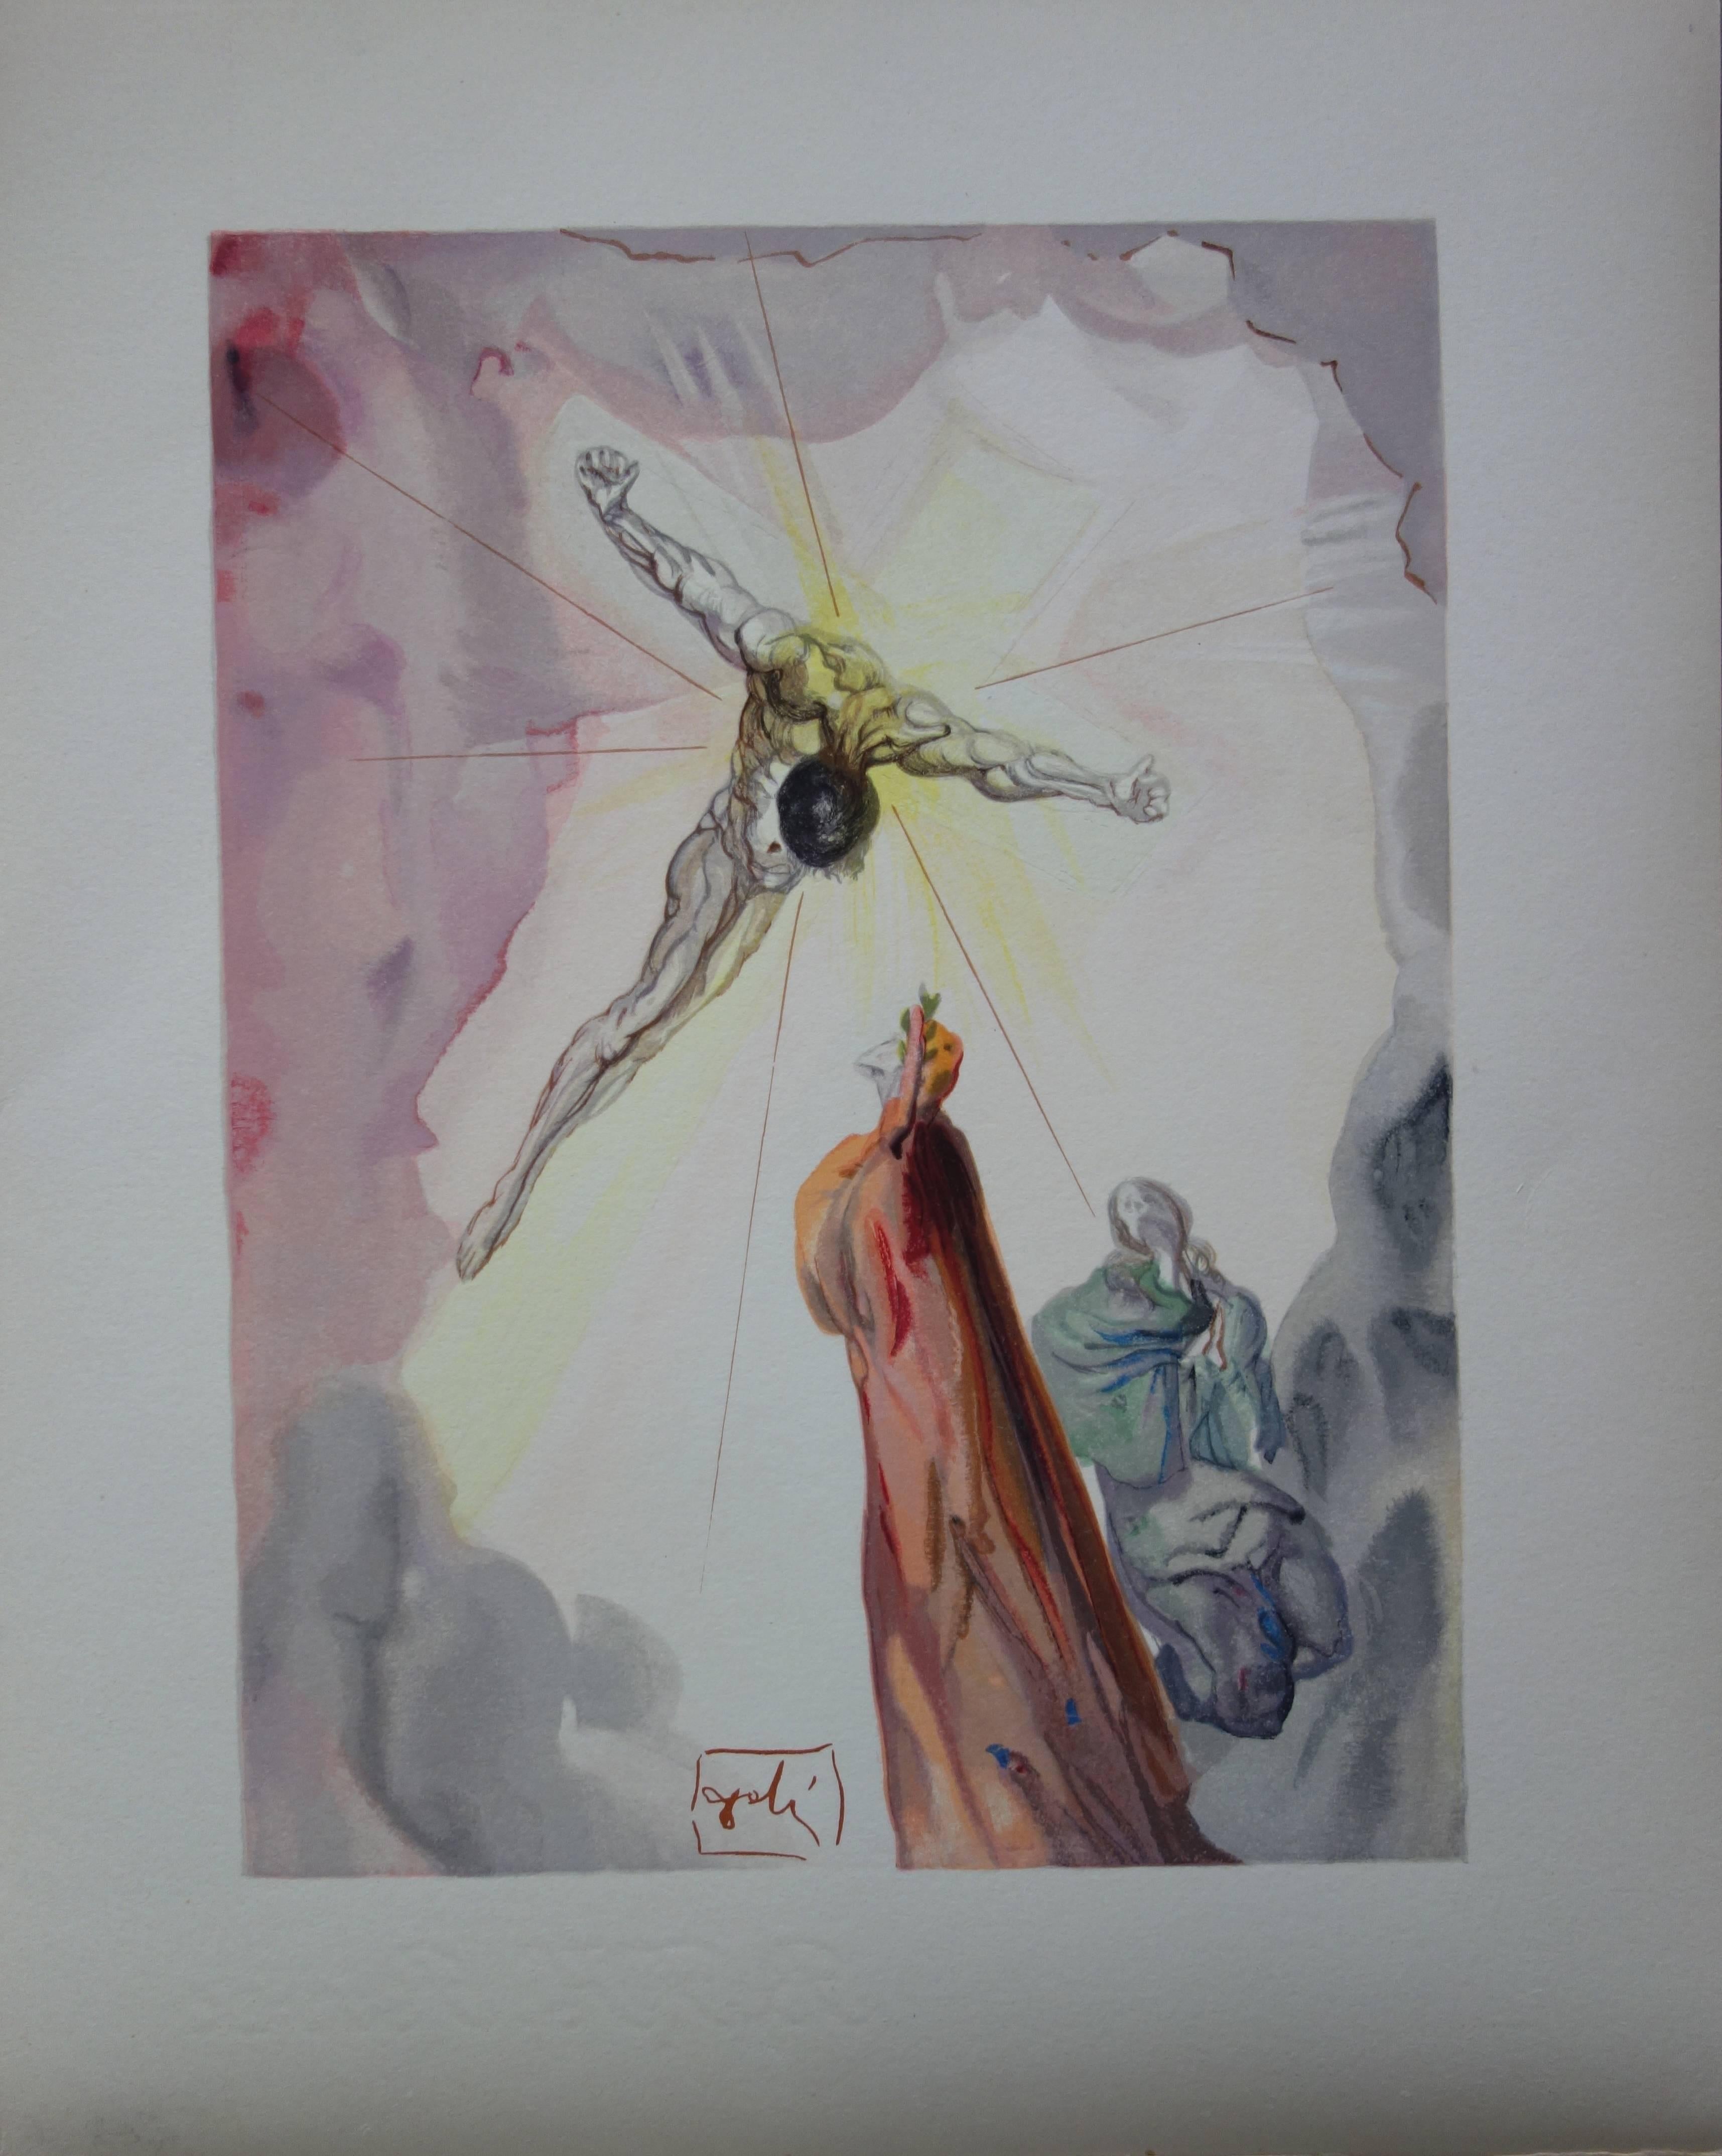 Salvador Dalí Figurative Print - Heaven 14 - The Apparition of Christ - Original woodcut - 1963